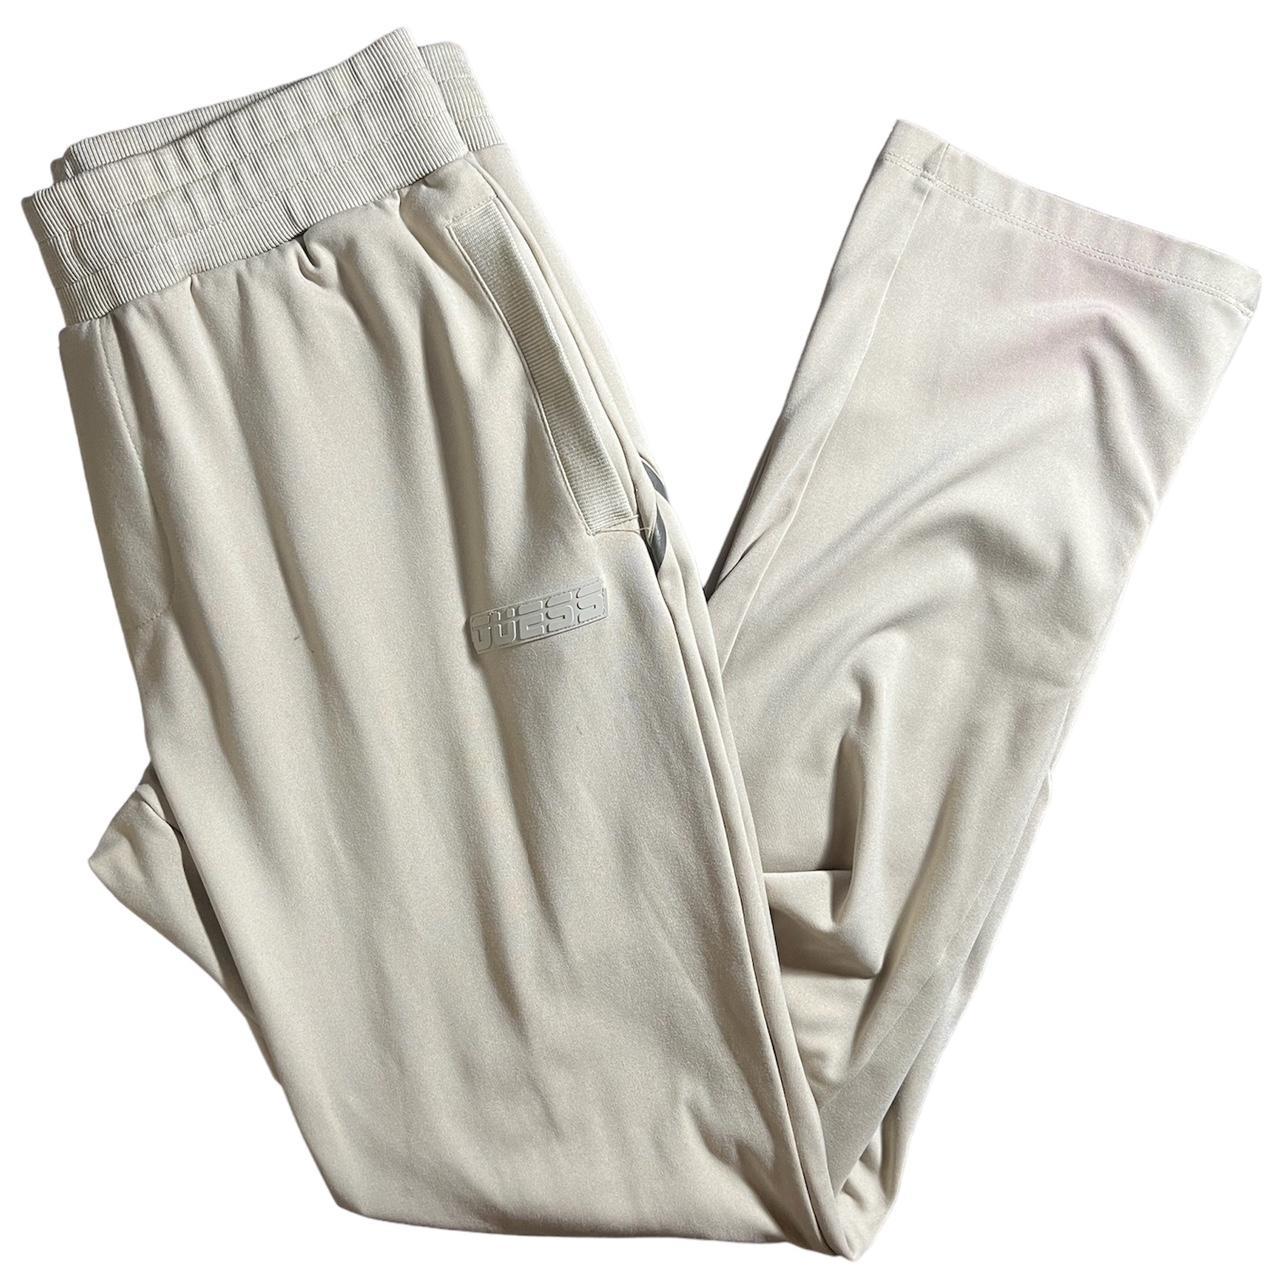 Reebok Classics Natural Dye Pants Beige - Mens - Sweatpants Reebok